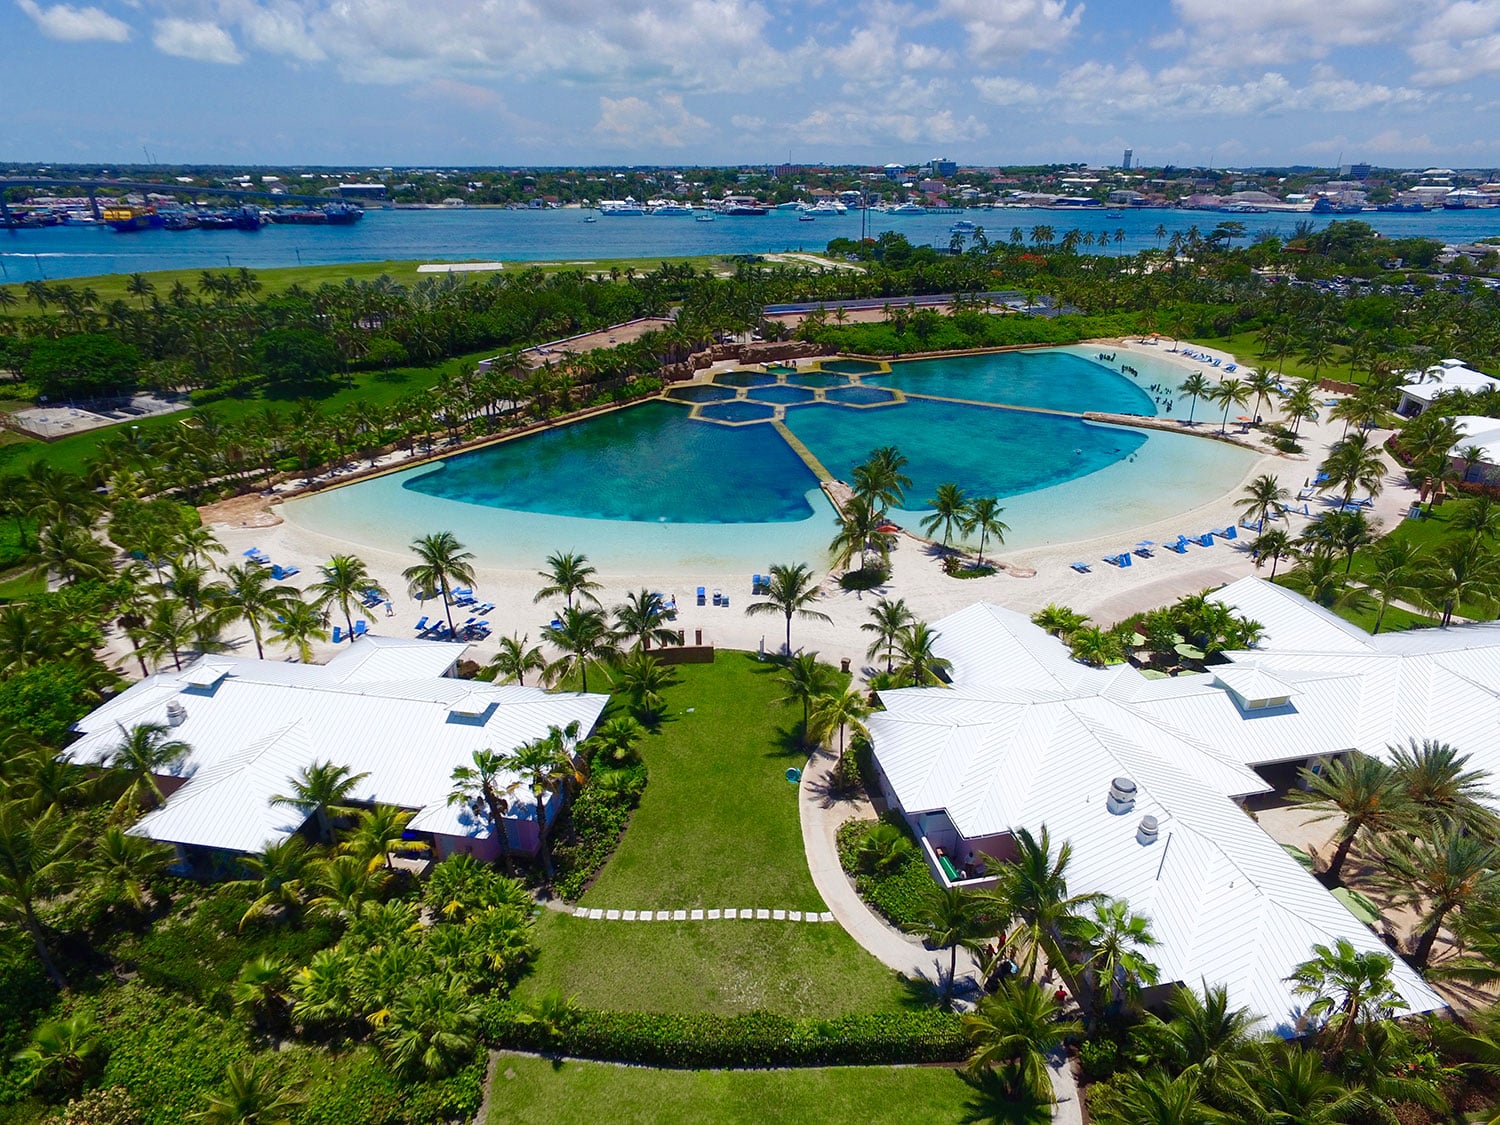 An Atlantis island beach resort.